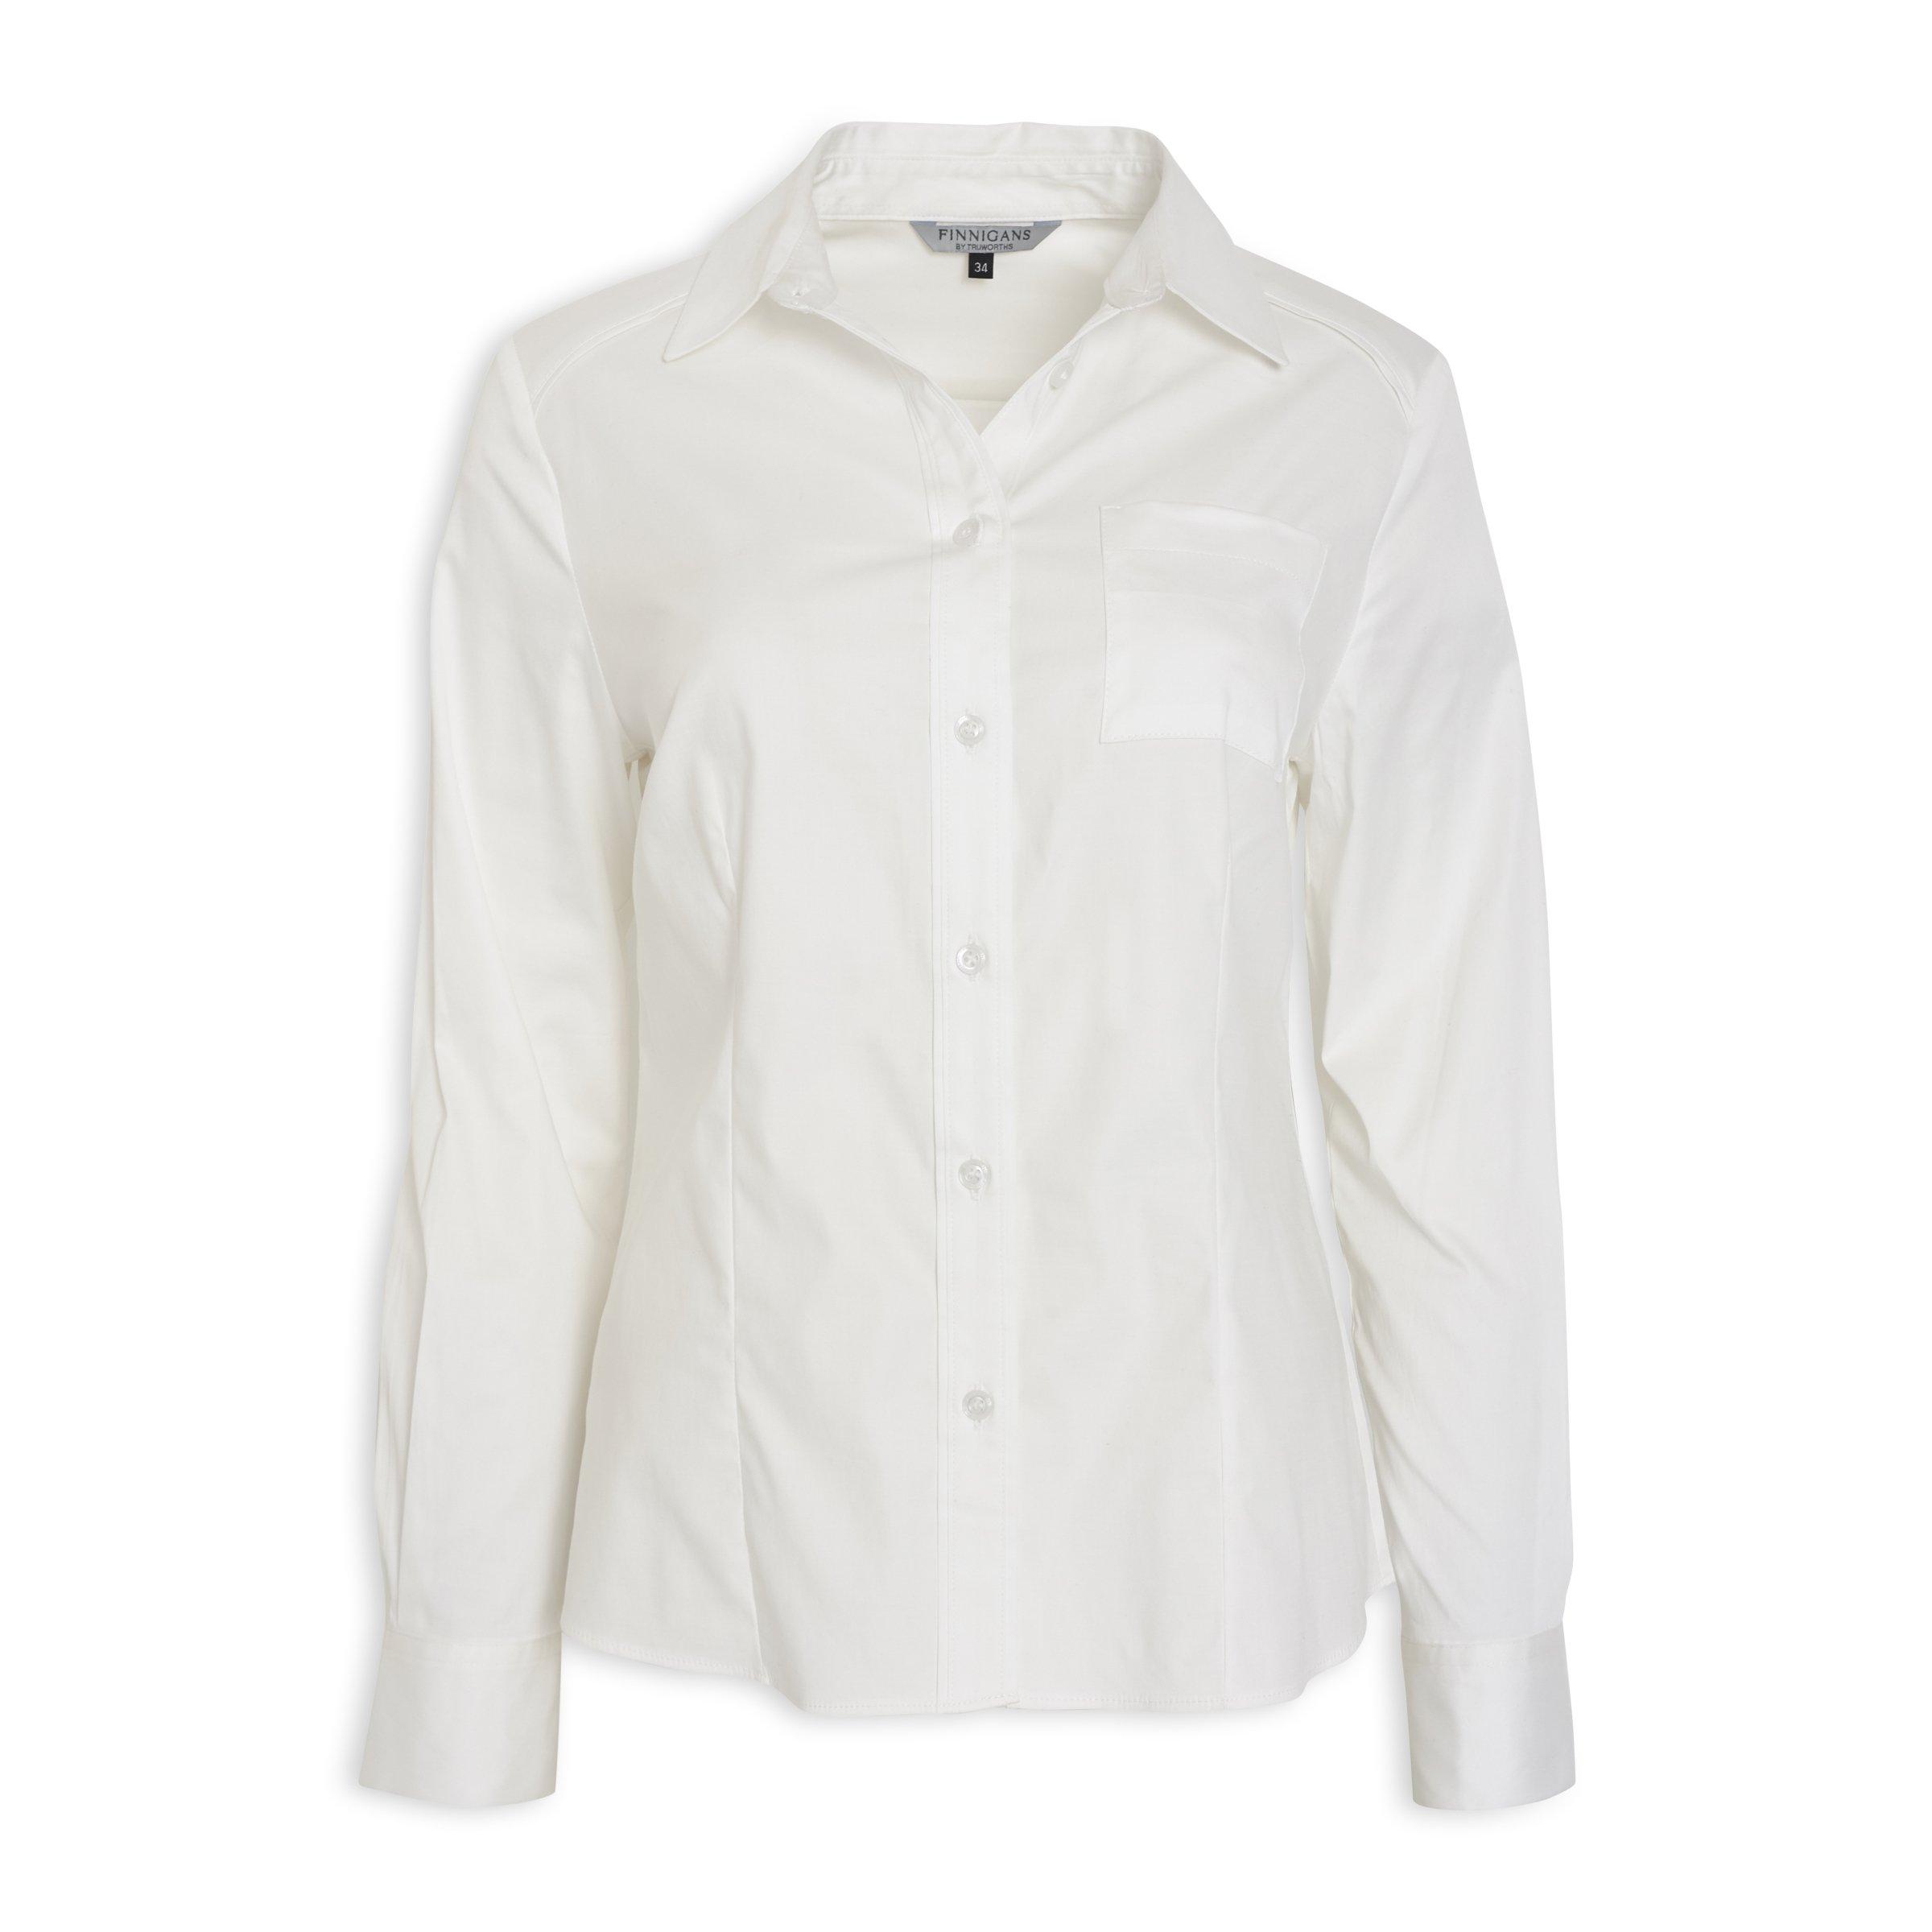 Buy Finnigans White Shape Shirt Online | Truworths